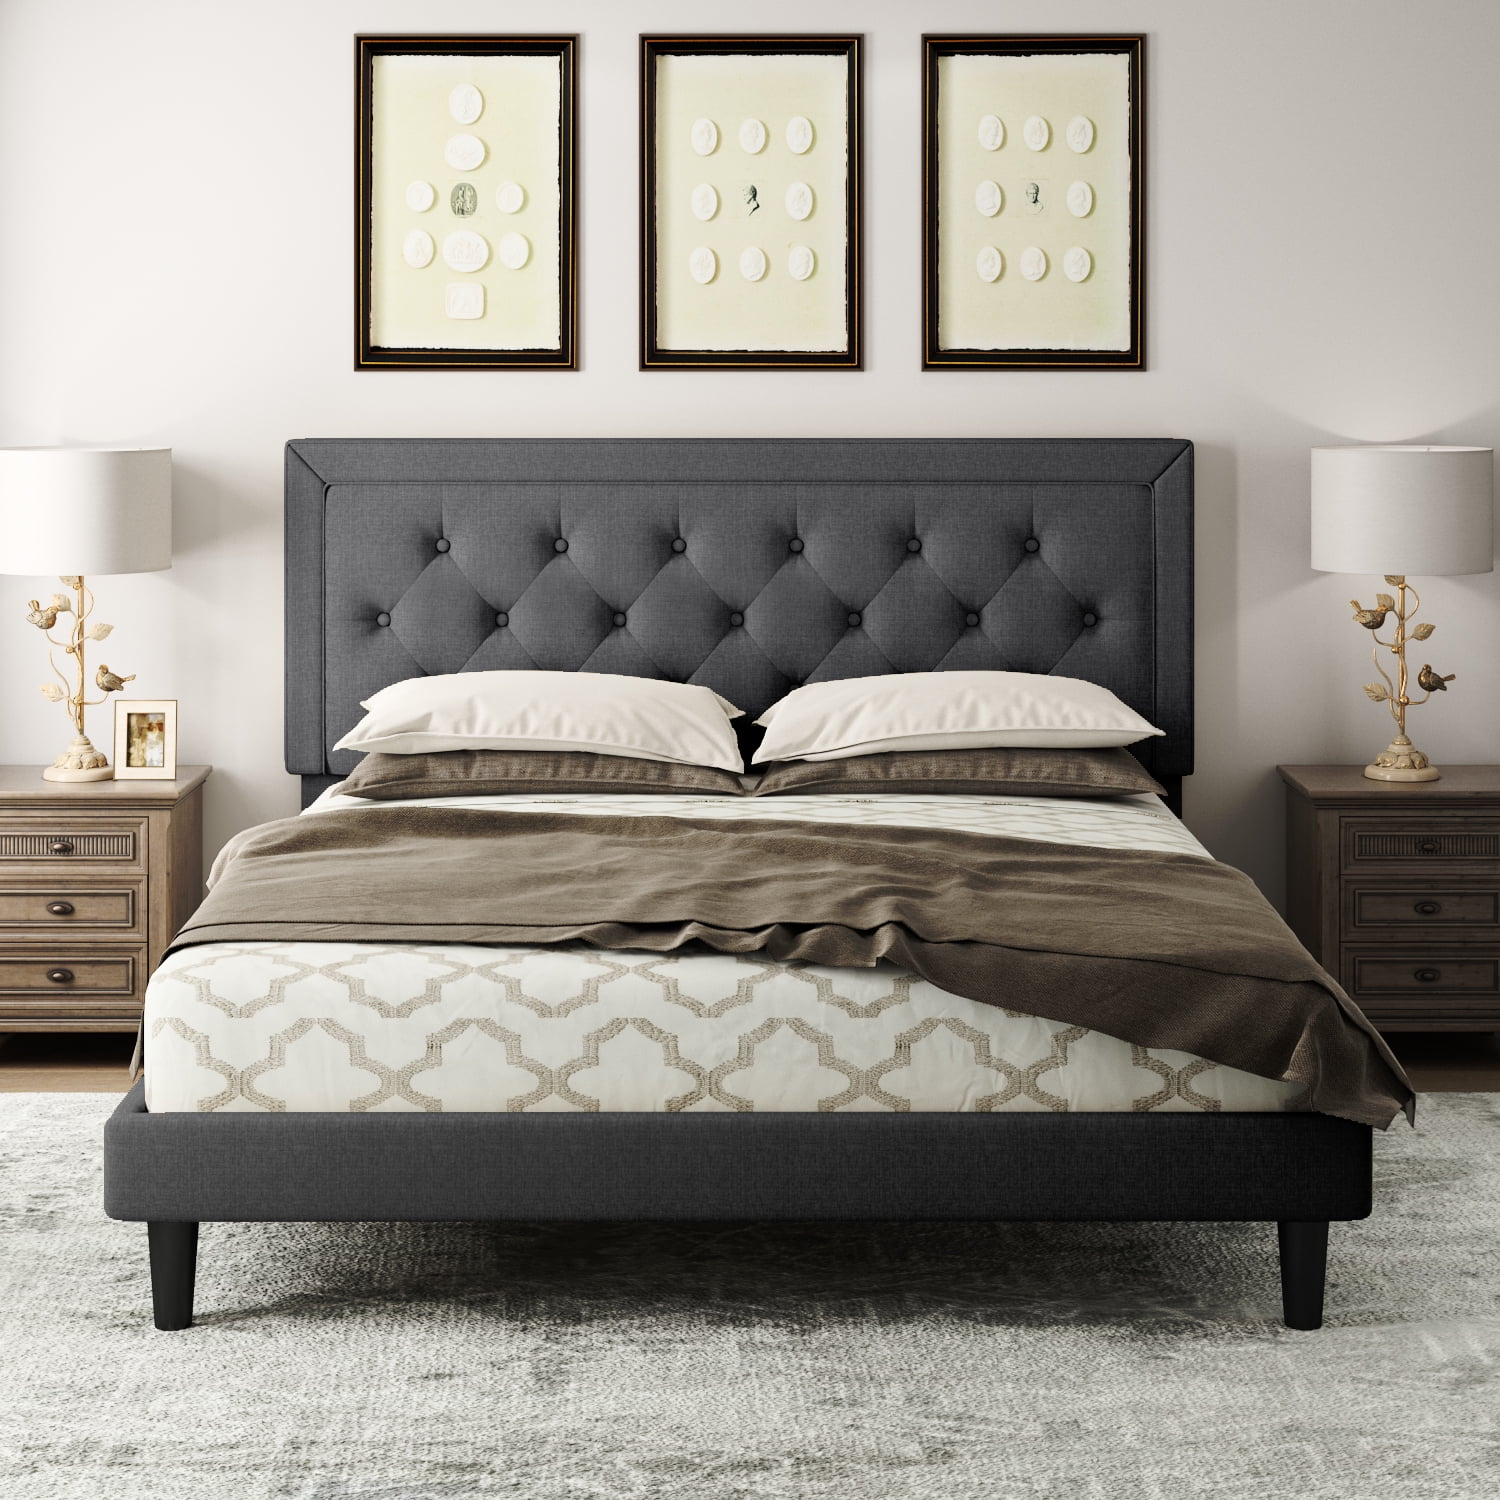 Platform Fabric Upholstered Bed Frame, Amolife King Size Platform Bed Frame With Headboard And 4 Storage Drawers